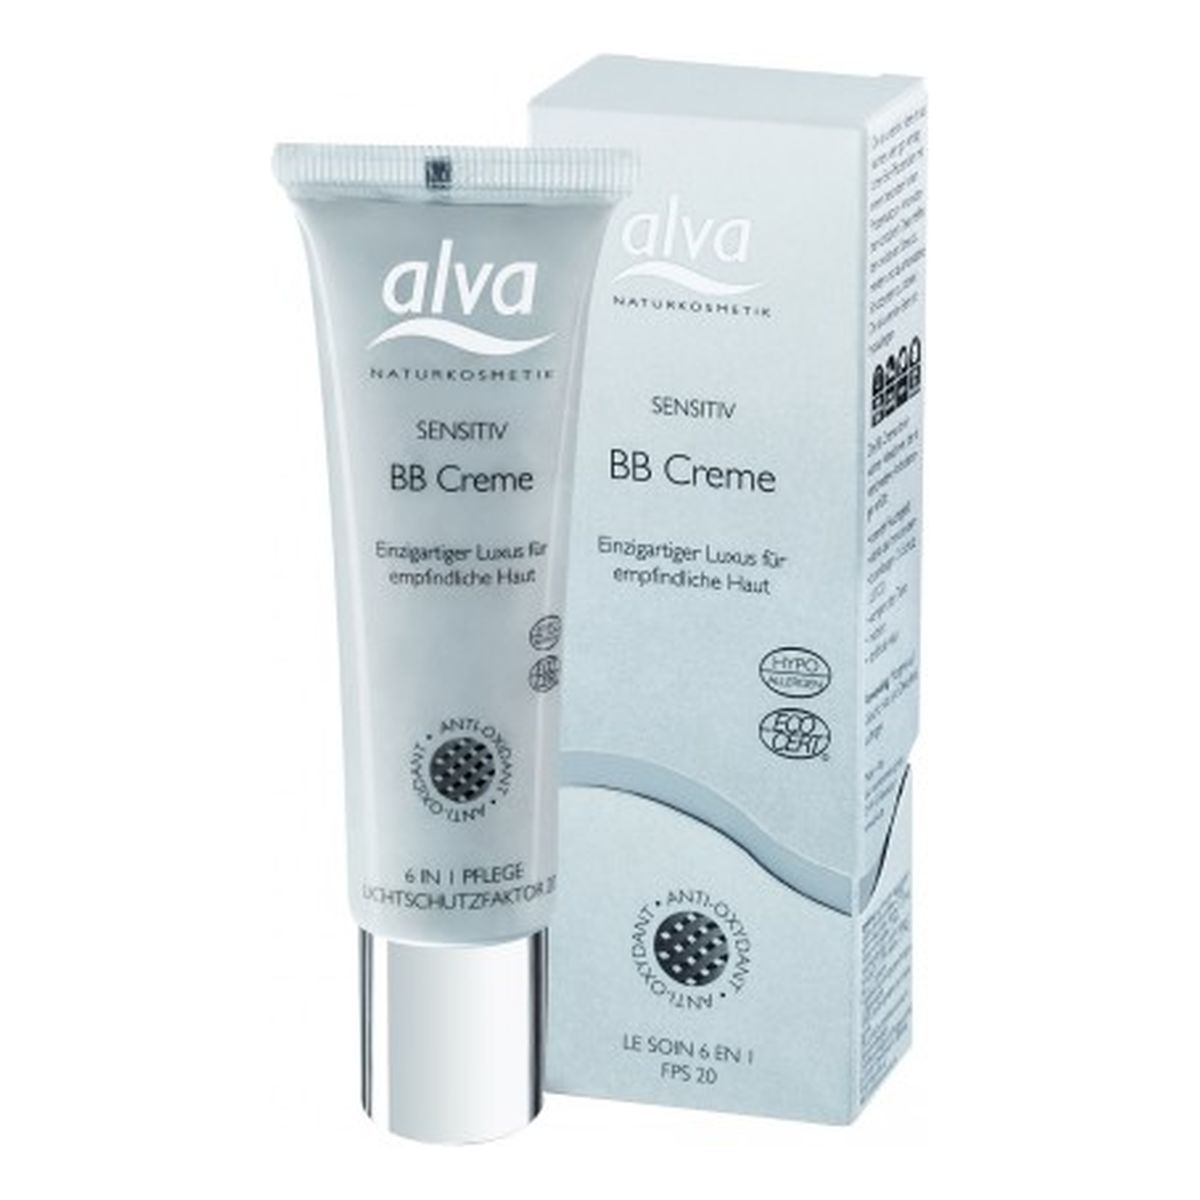 ALVA Sensitive Beauty Balm – krem wyrównujący koloryt skóry Medium Brown 30ml